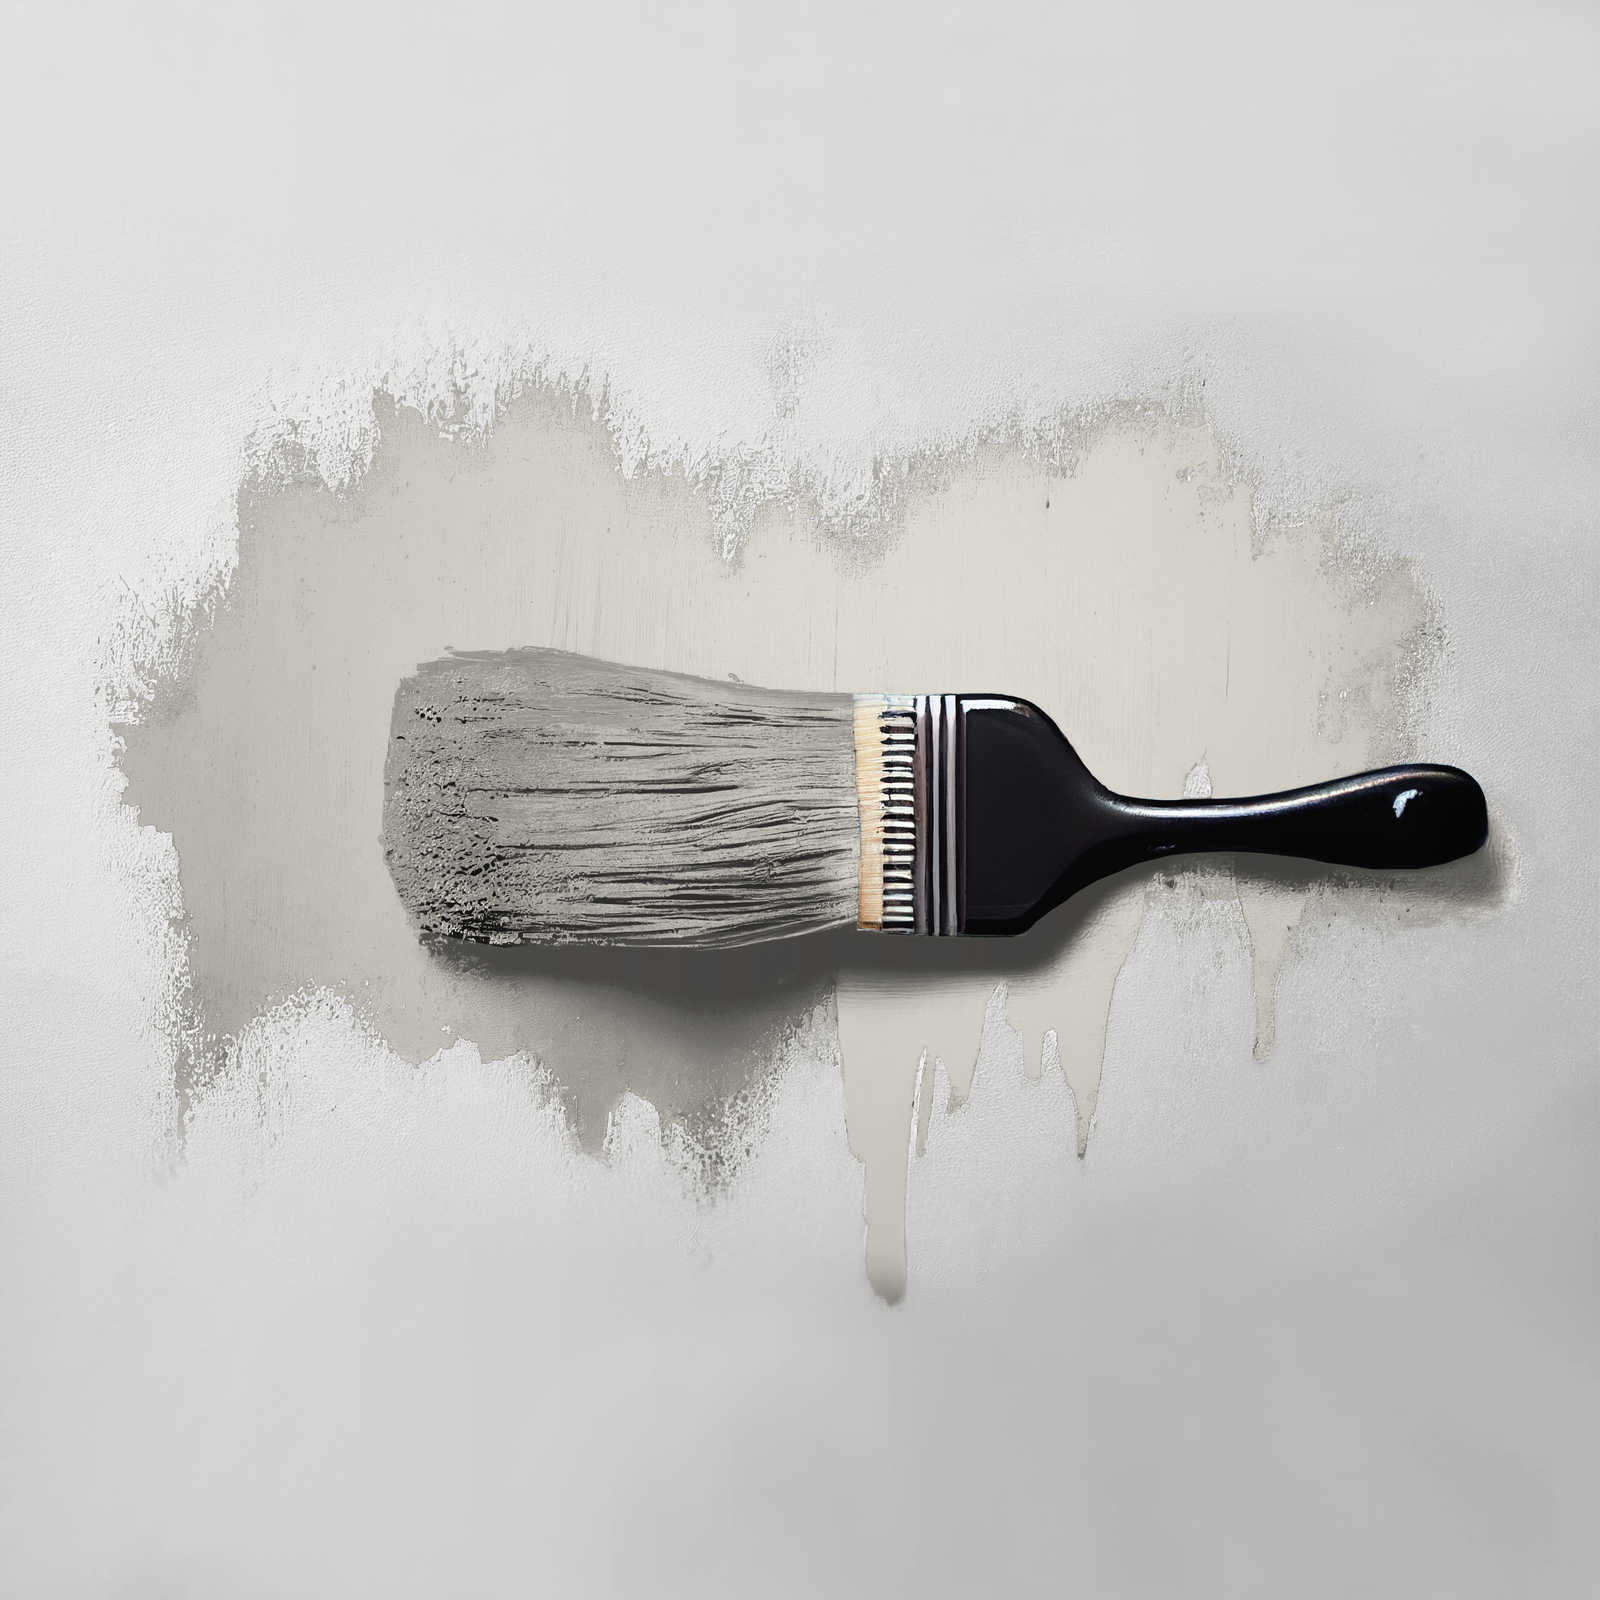             Pittura murale TCK1016 »Opened Oyster« in grigio tenue – 2,5 litri
        